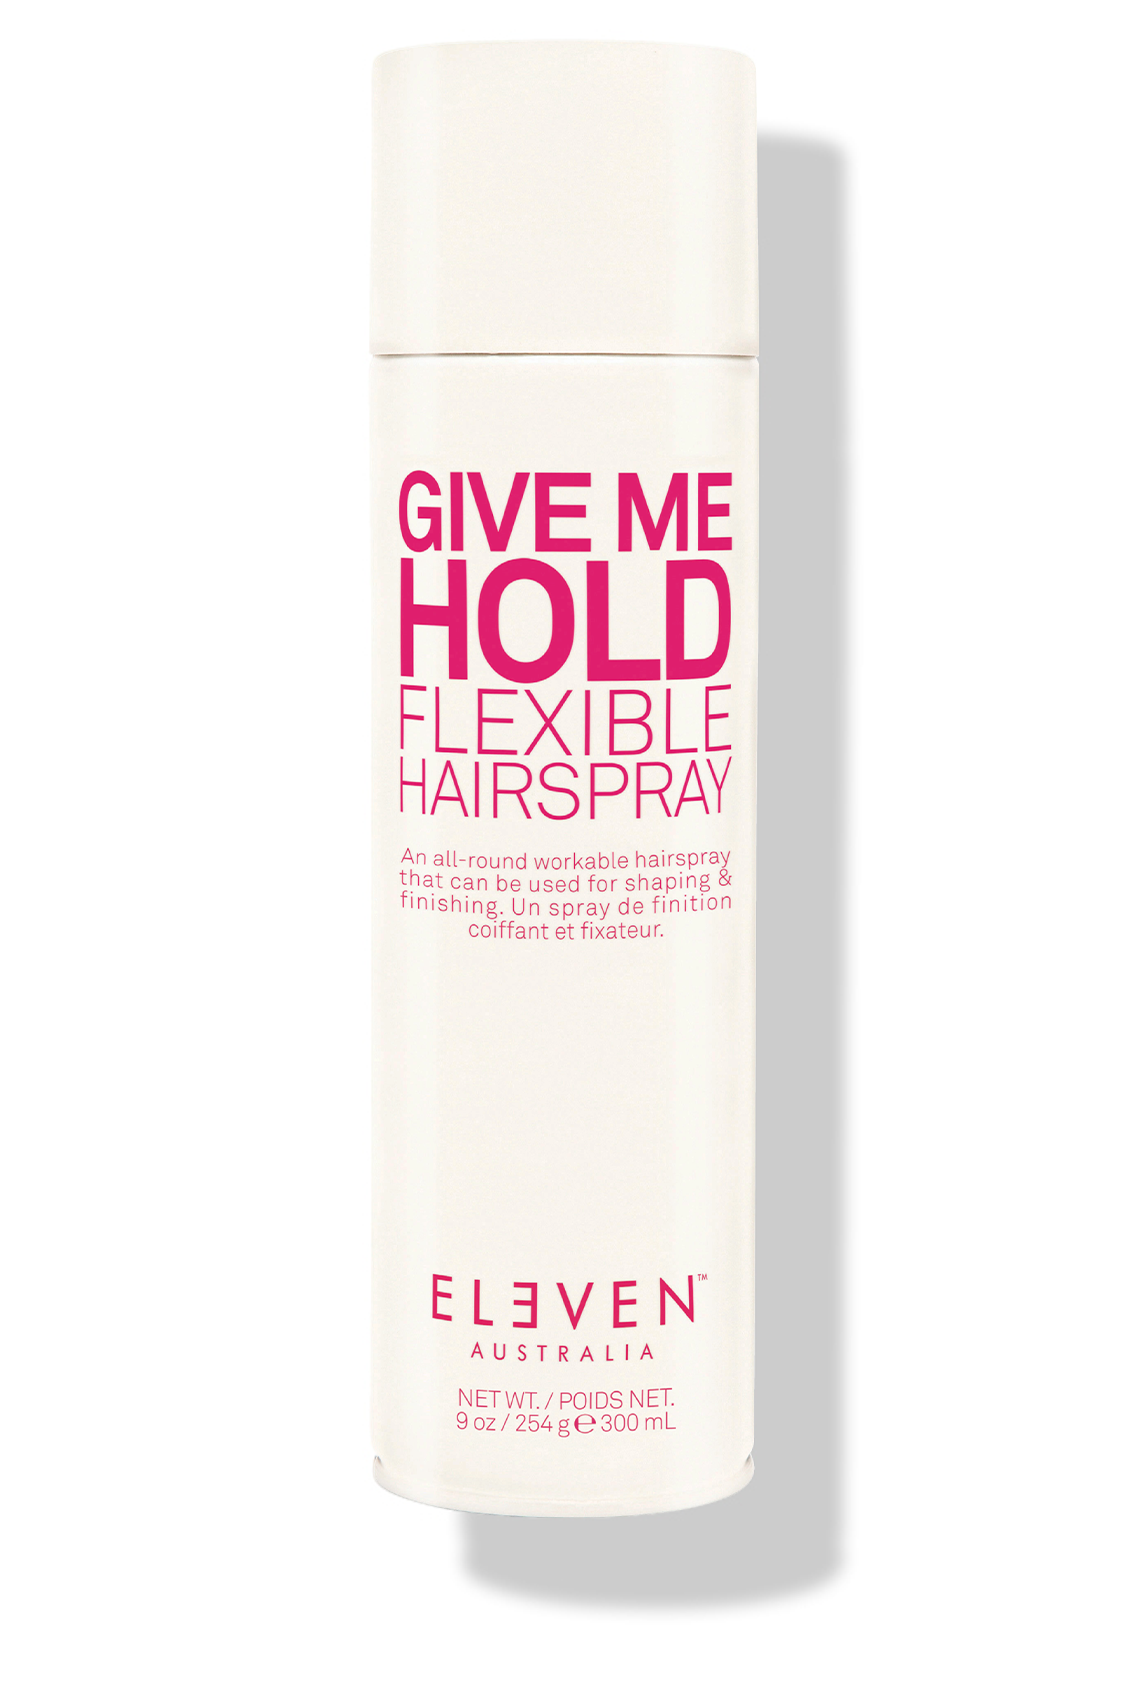 Eleven Australia give me hold flexible hairspray